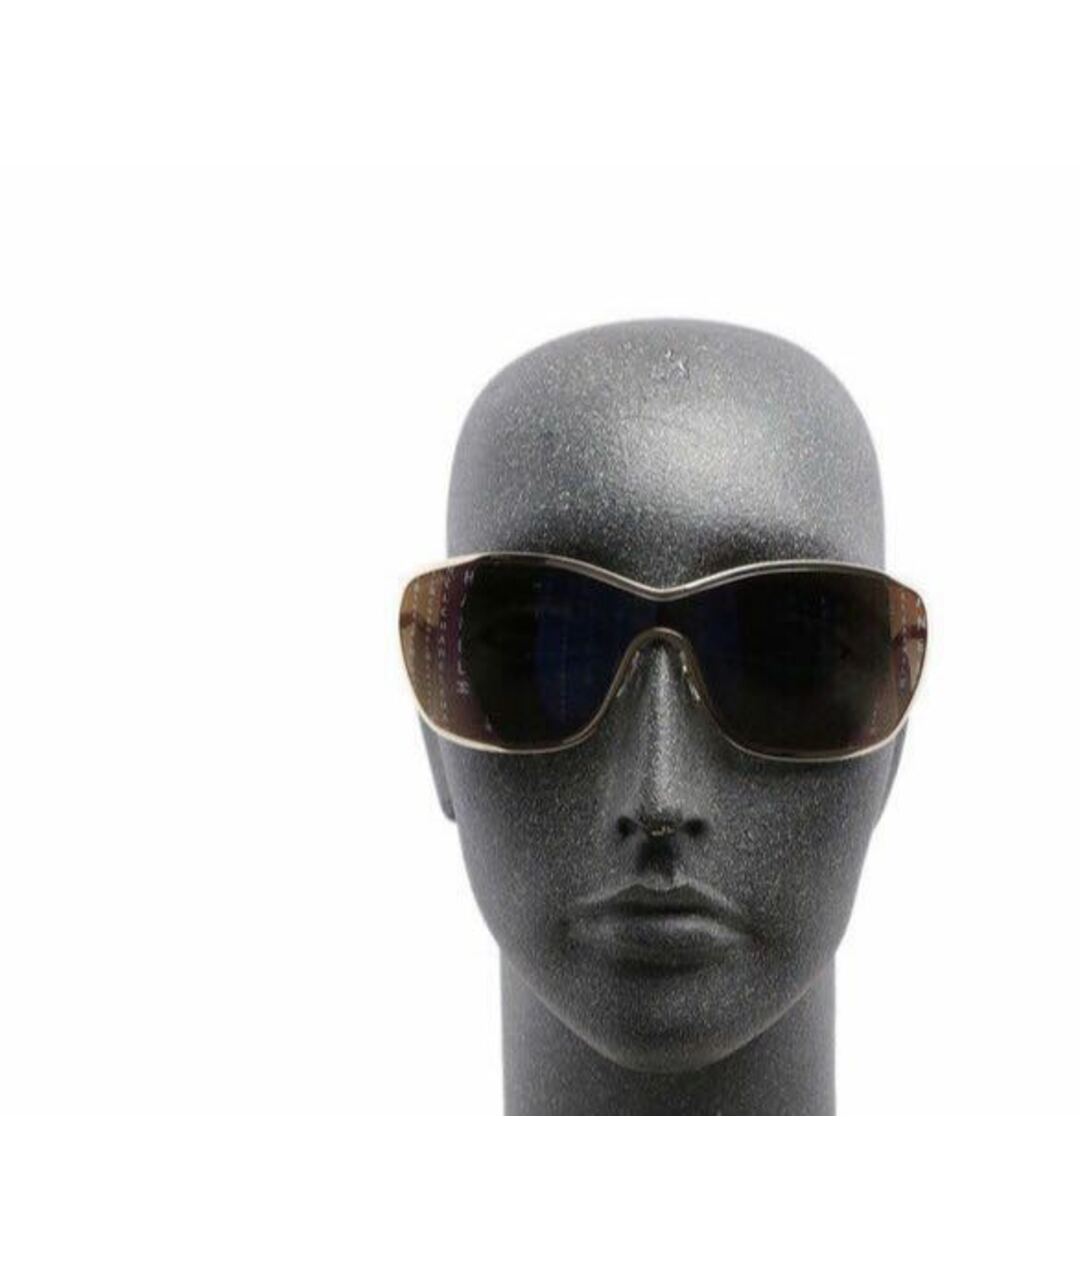 CHANEL PRE-OWNED Золотые металлические солнцезащитные очки, фото 7